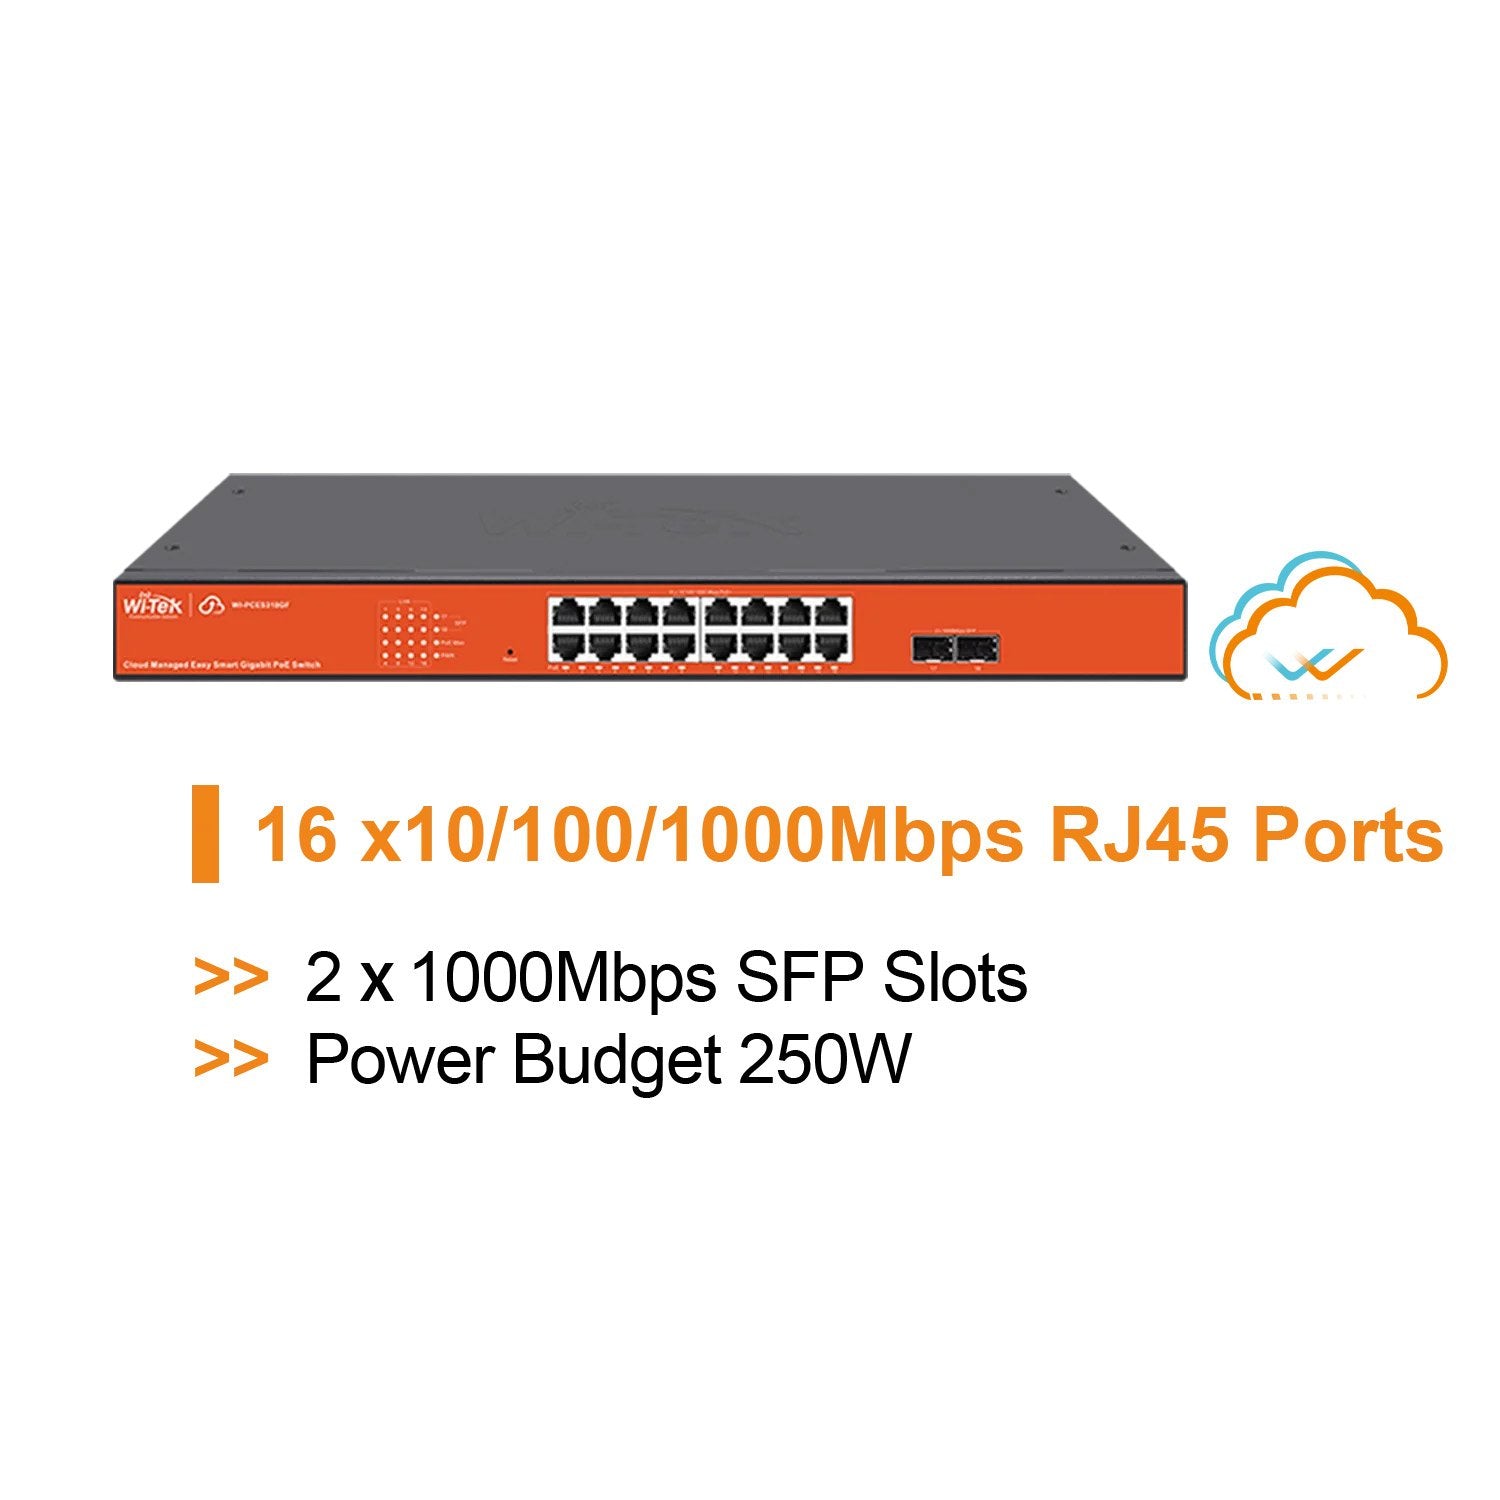 Wi-Tek 18-Port Gigabit Cloud Managed POE Switch, 16 x POE, 2 x SFP, 250W, Max 30W Per Port, Rack Mount